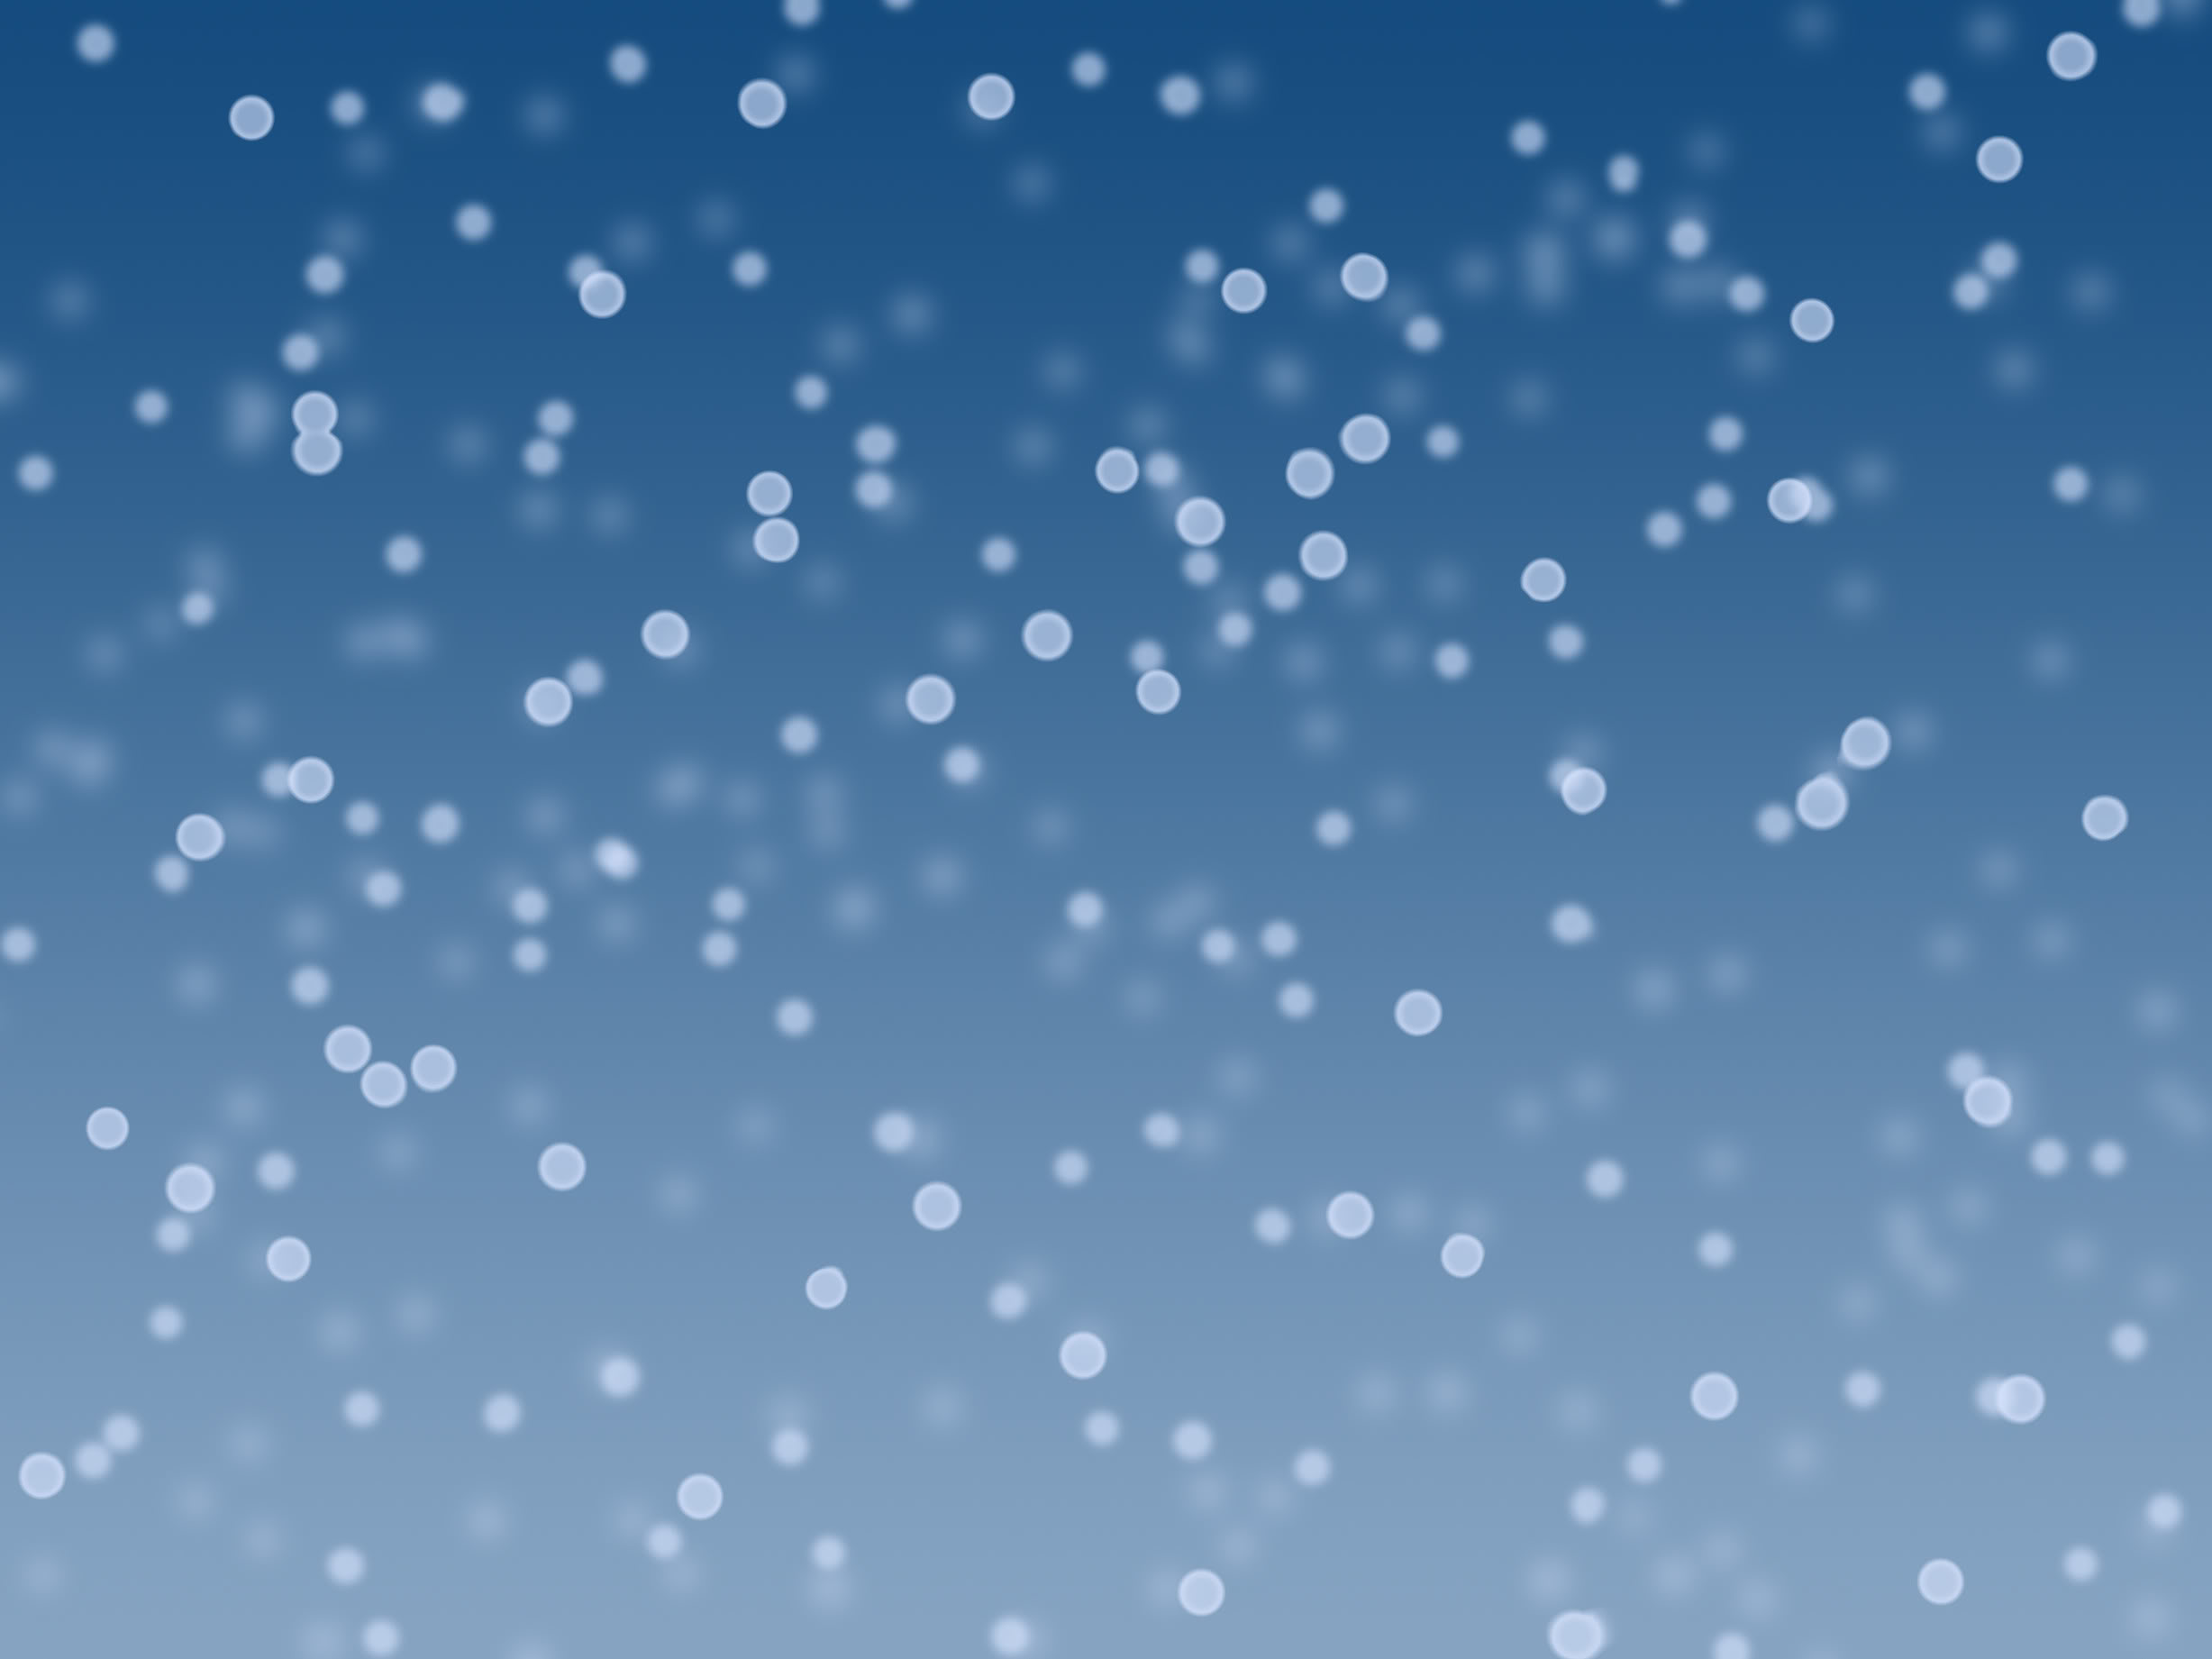 2455x1841 pin Snowfall clipart snowflake background #3